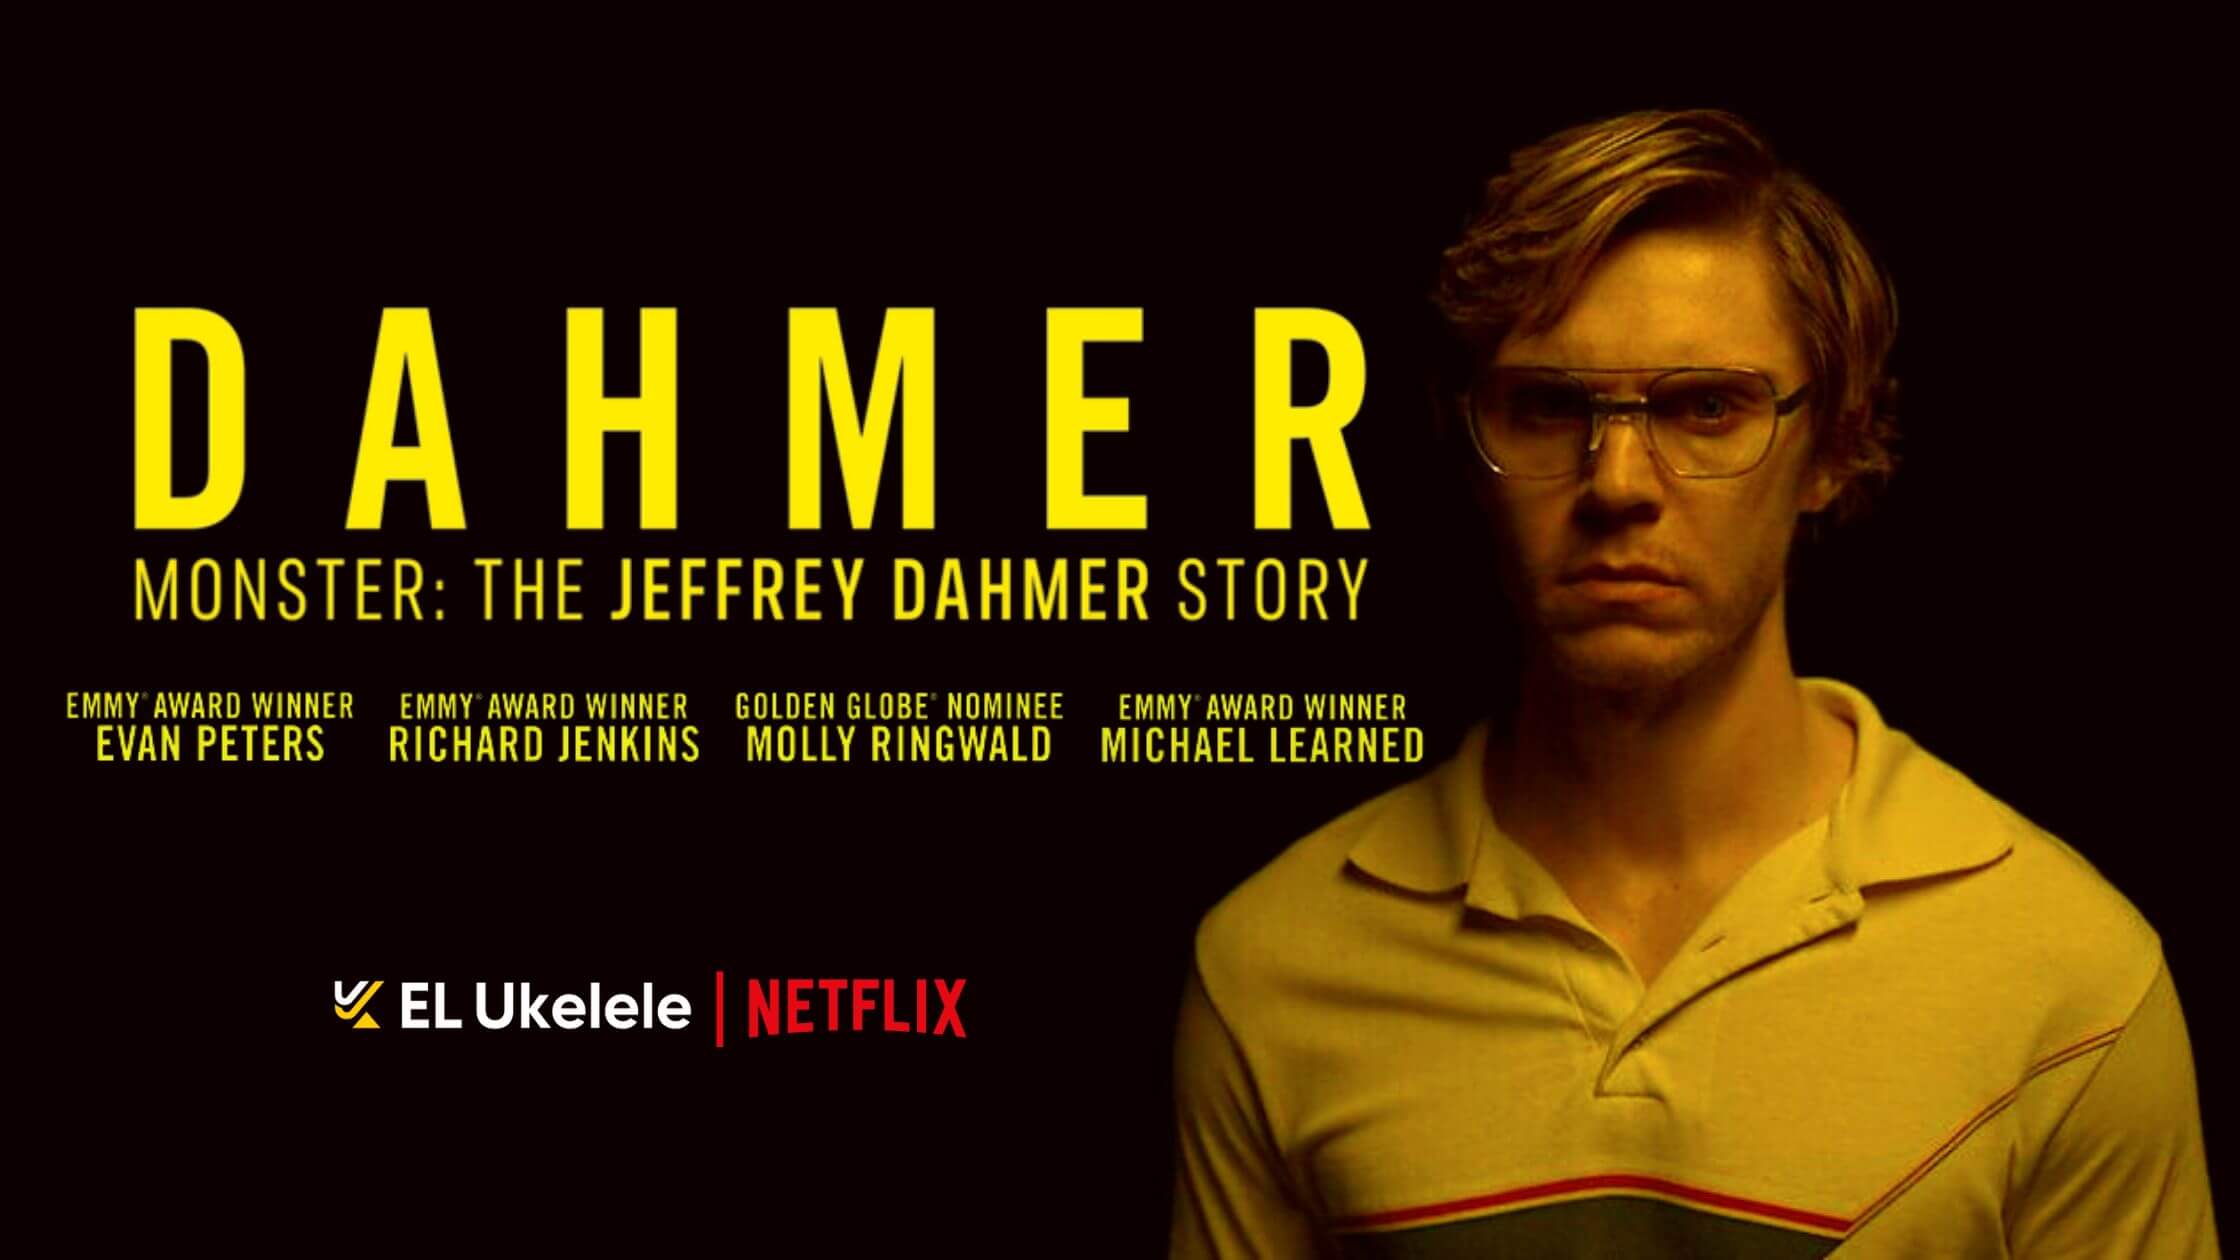 Estrenado el trailer de Netflix de DAHMER Monster the Jeffrey Dahmers story primera imagen de Evan Peters en la serie de Netflix 2